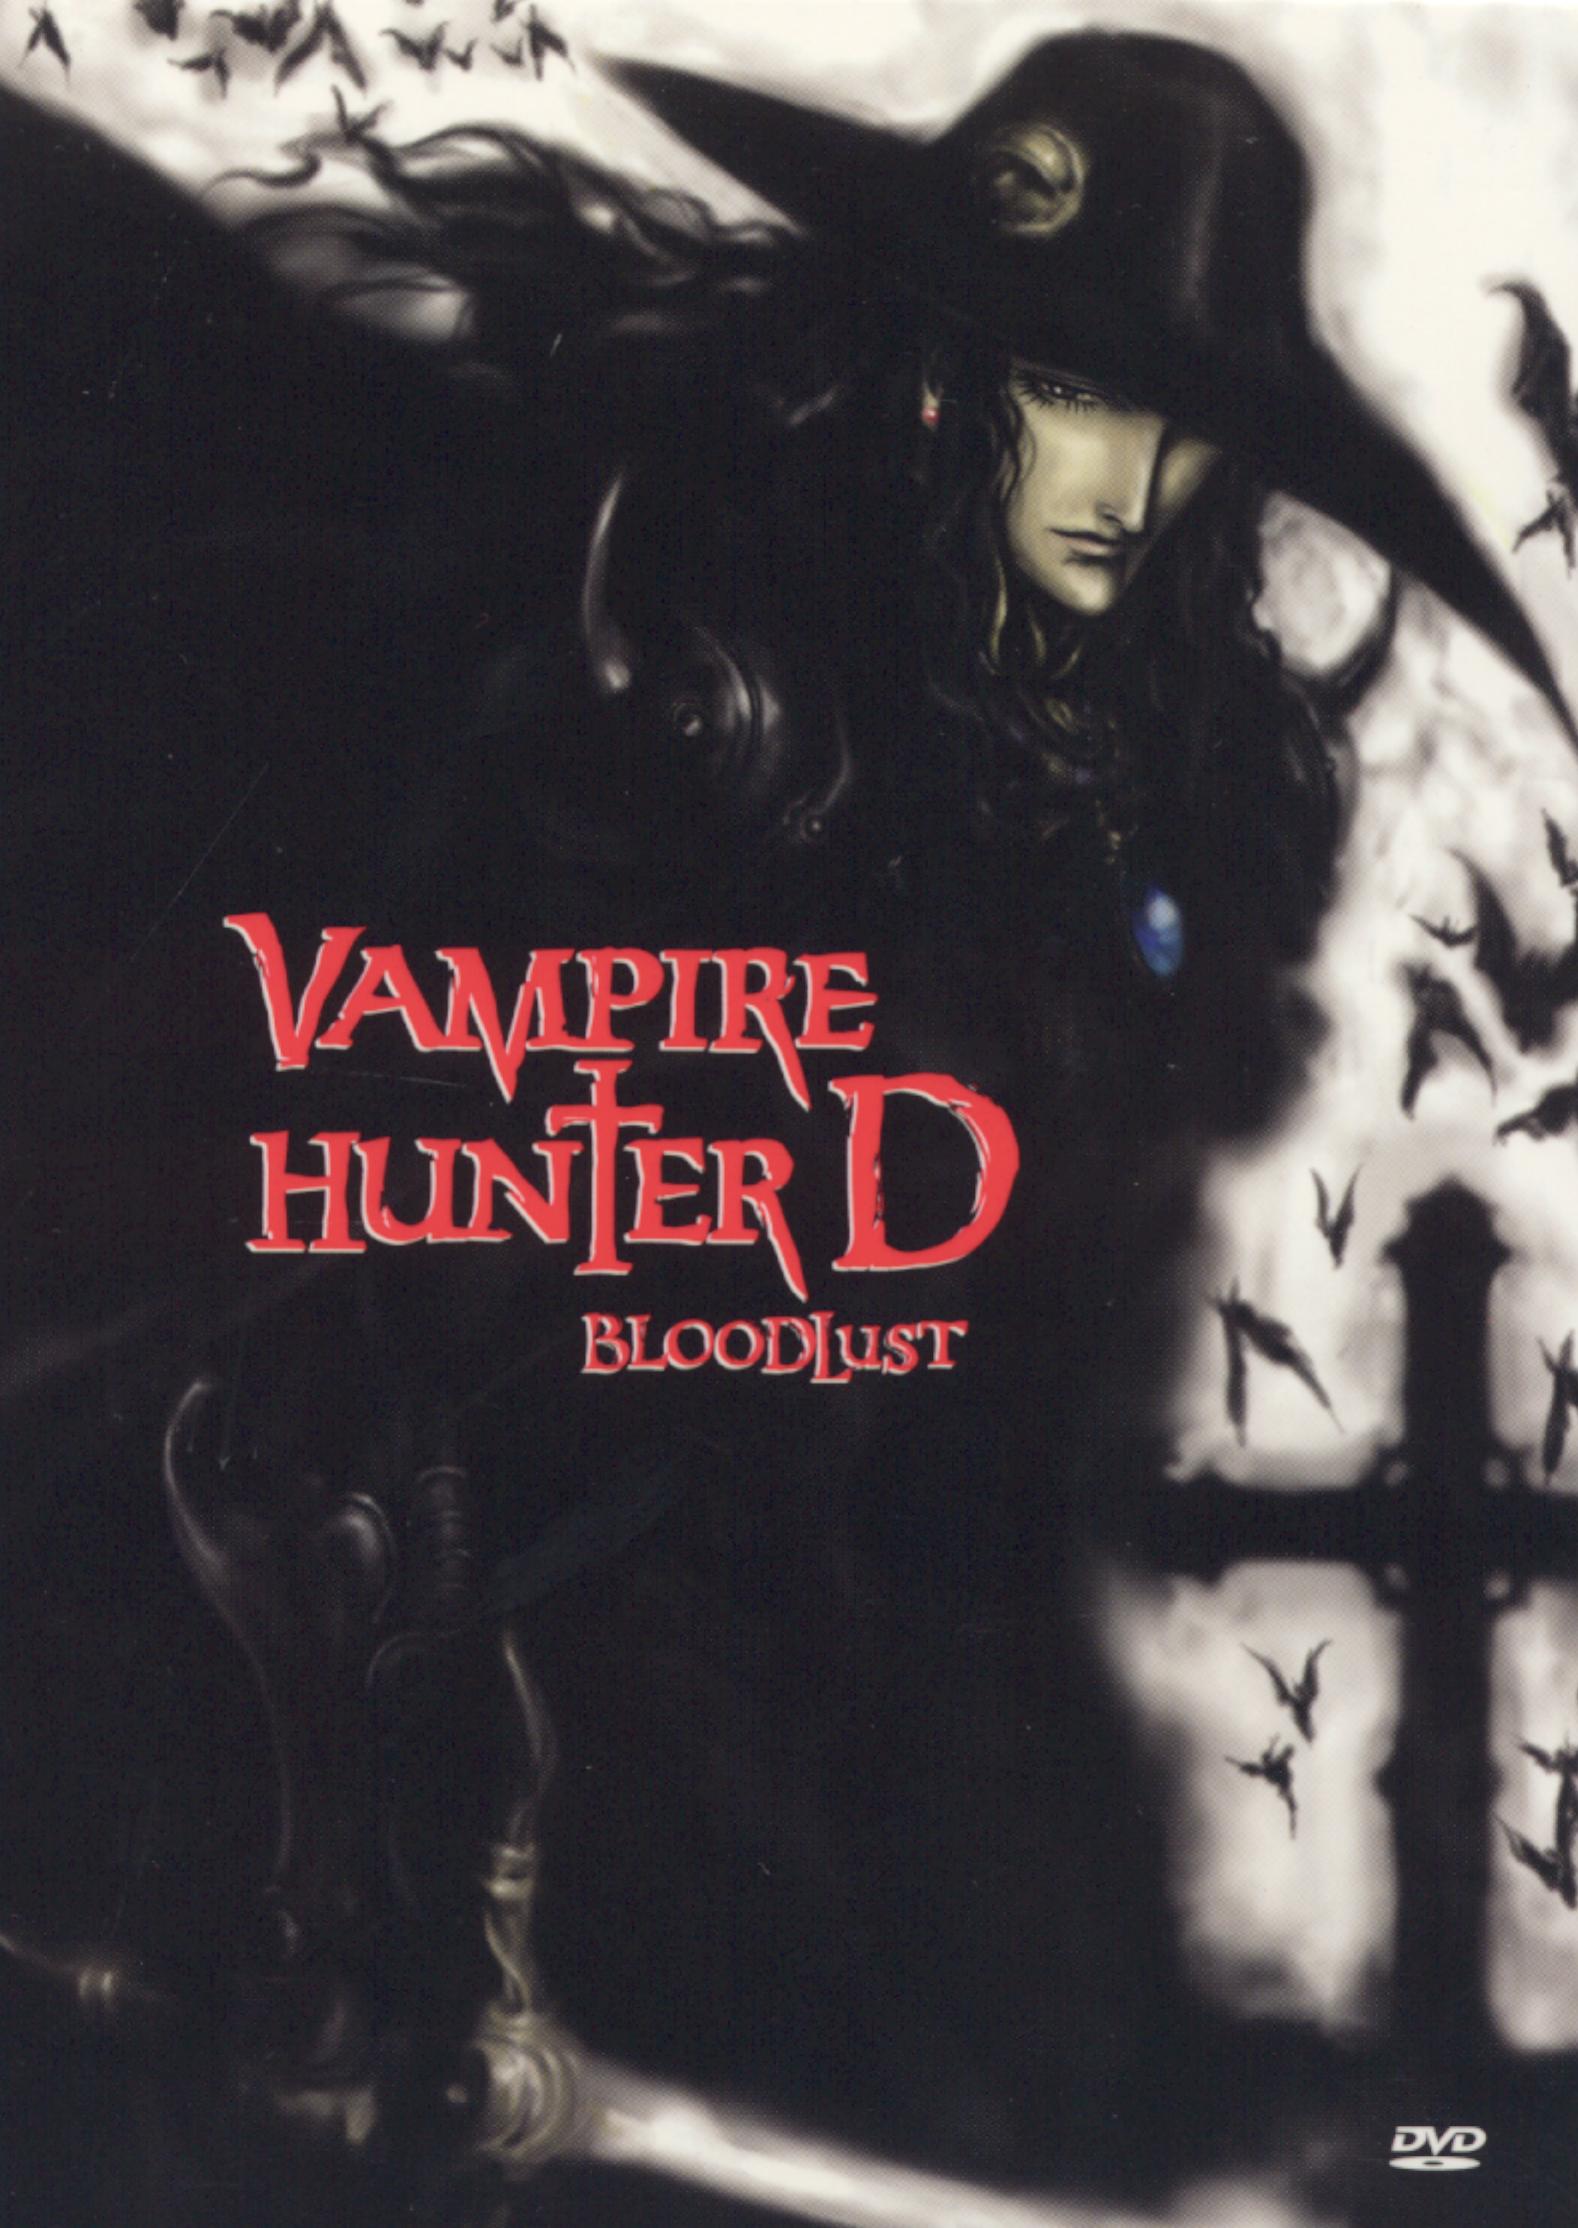 Review of Vampire Hunter D - Bloodlust